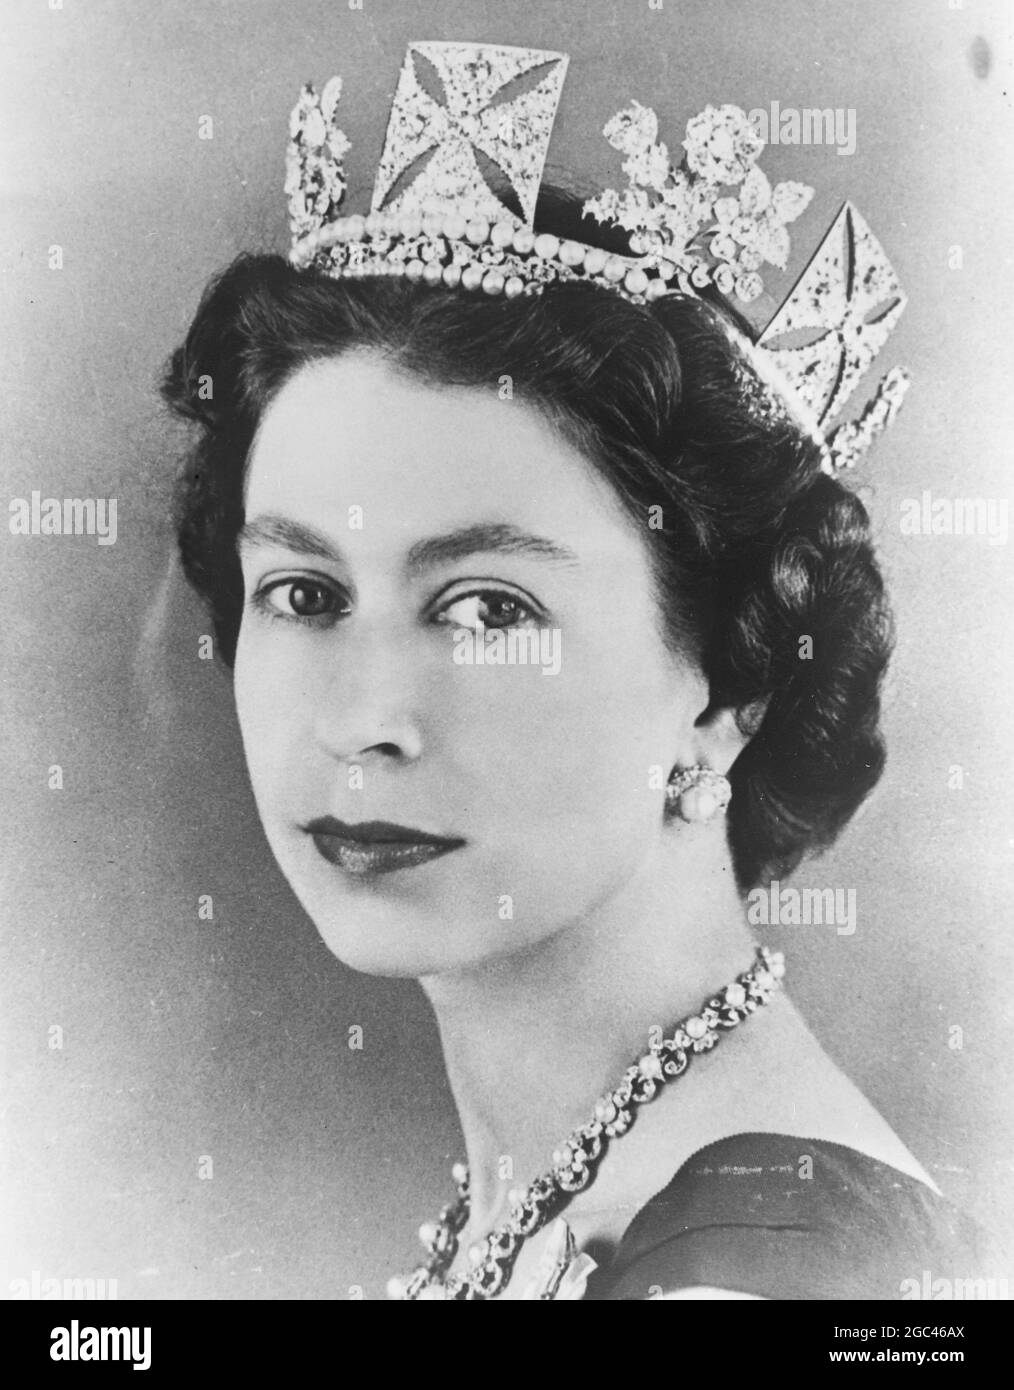 QUEEN ELIZABETH II PORTRÄT LONDON 23. NOVEMBER 1960 Stockfoto